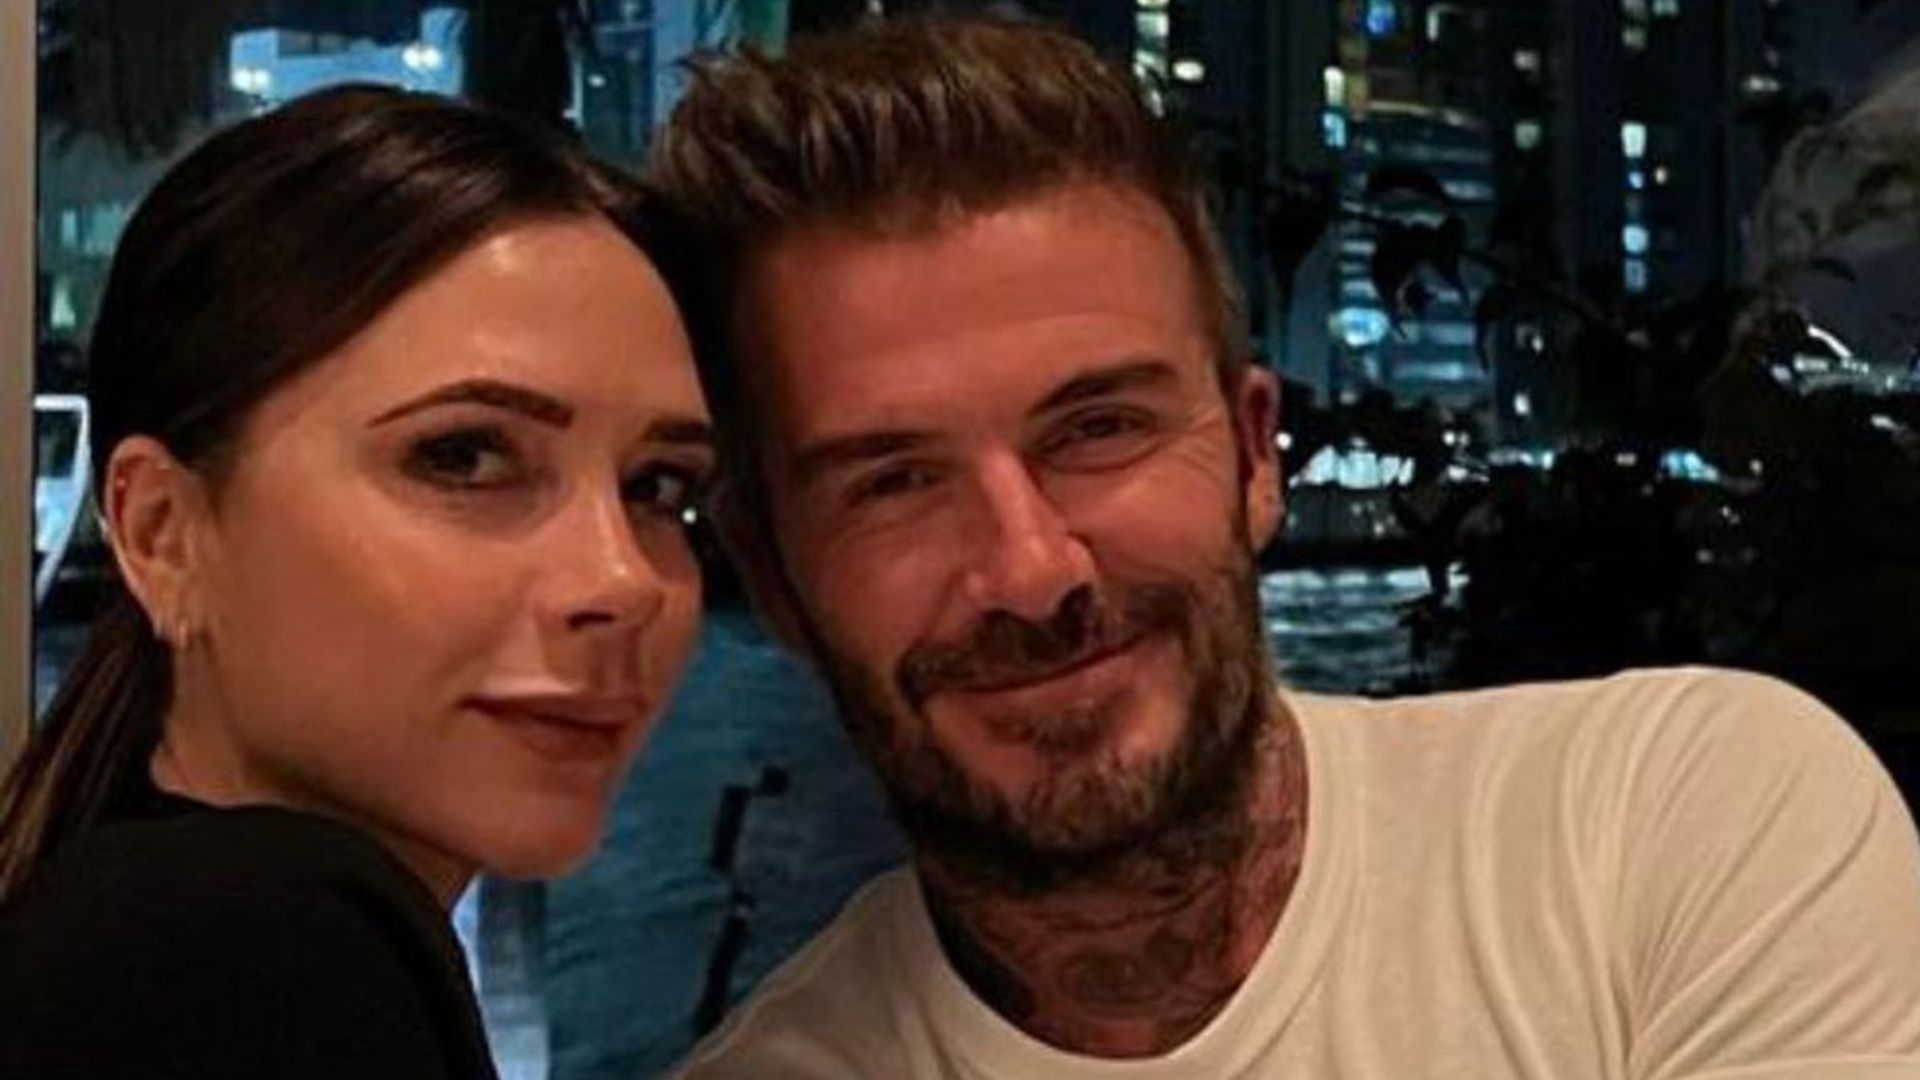 Victoria and David Beckham celebrate 23rd wedding anniversary